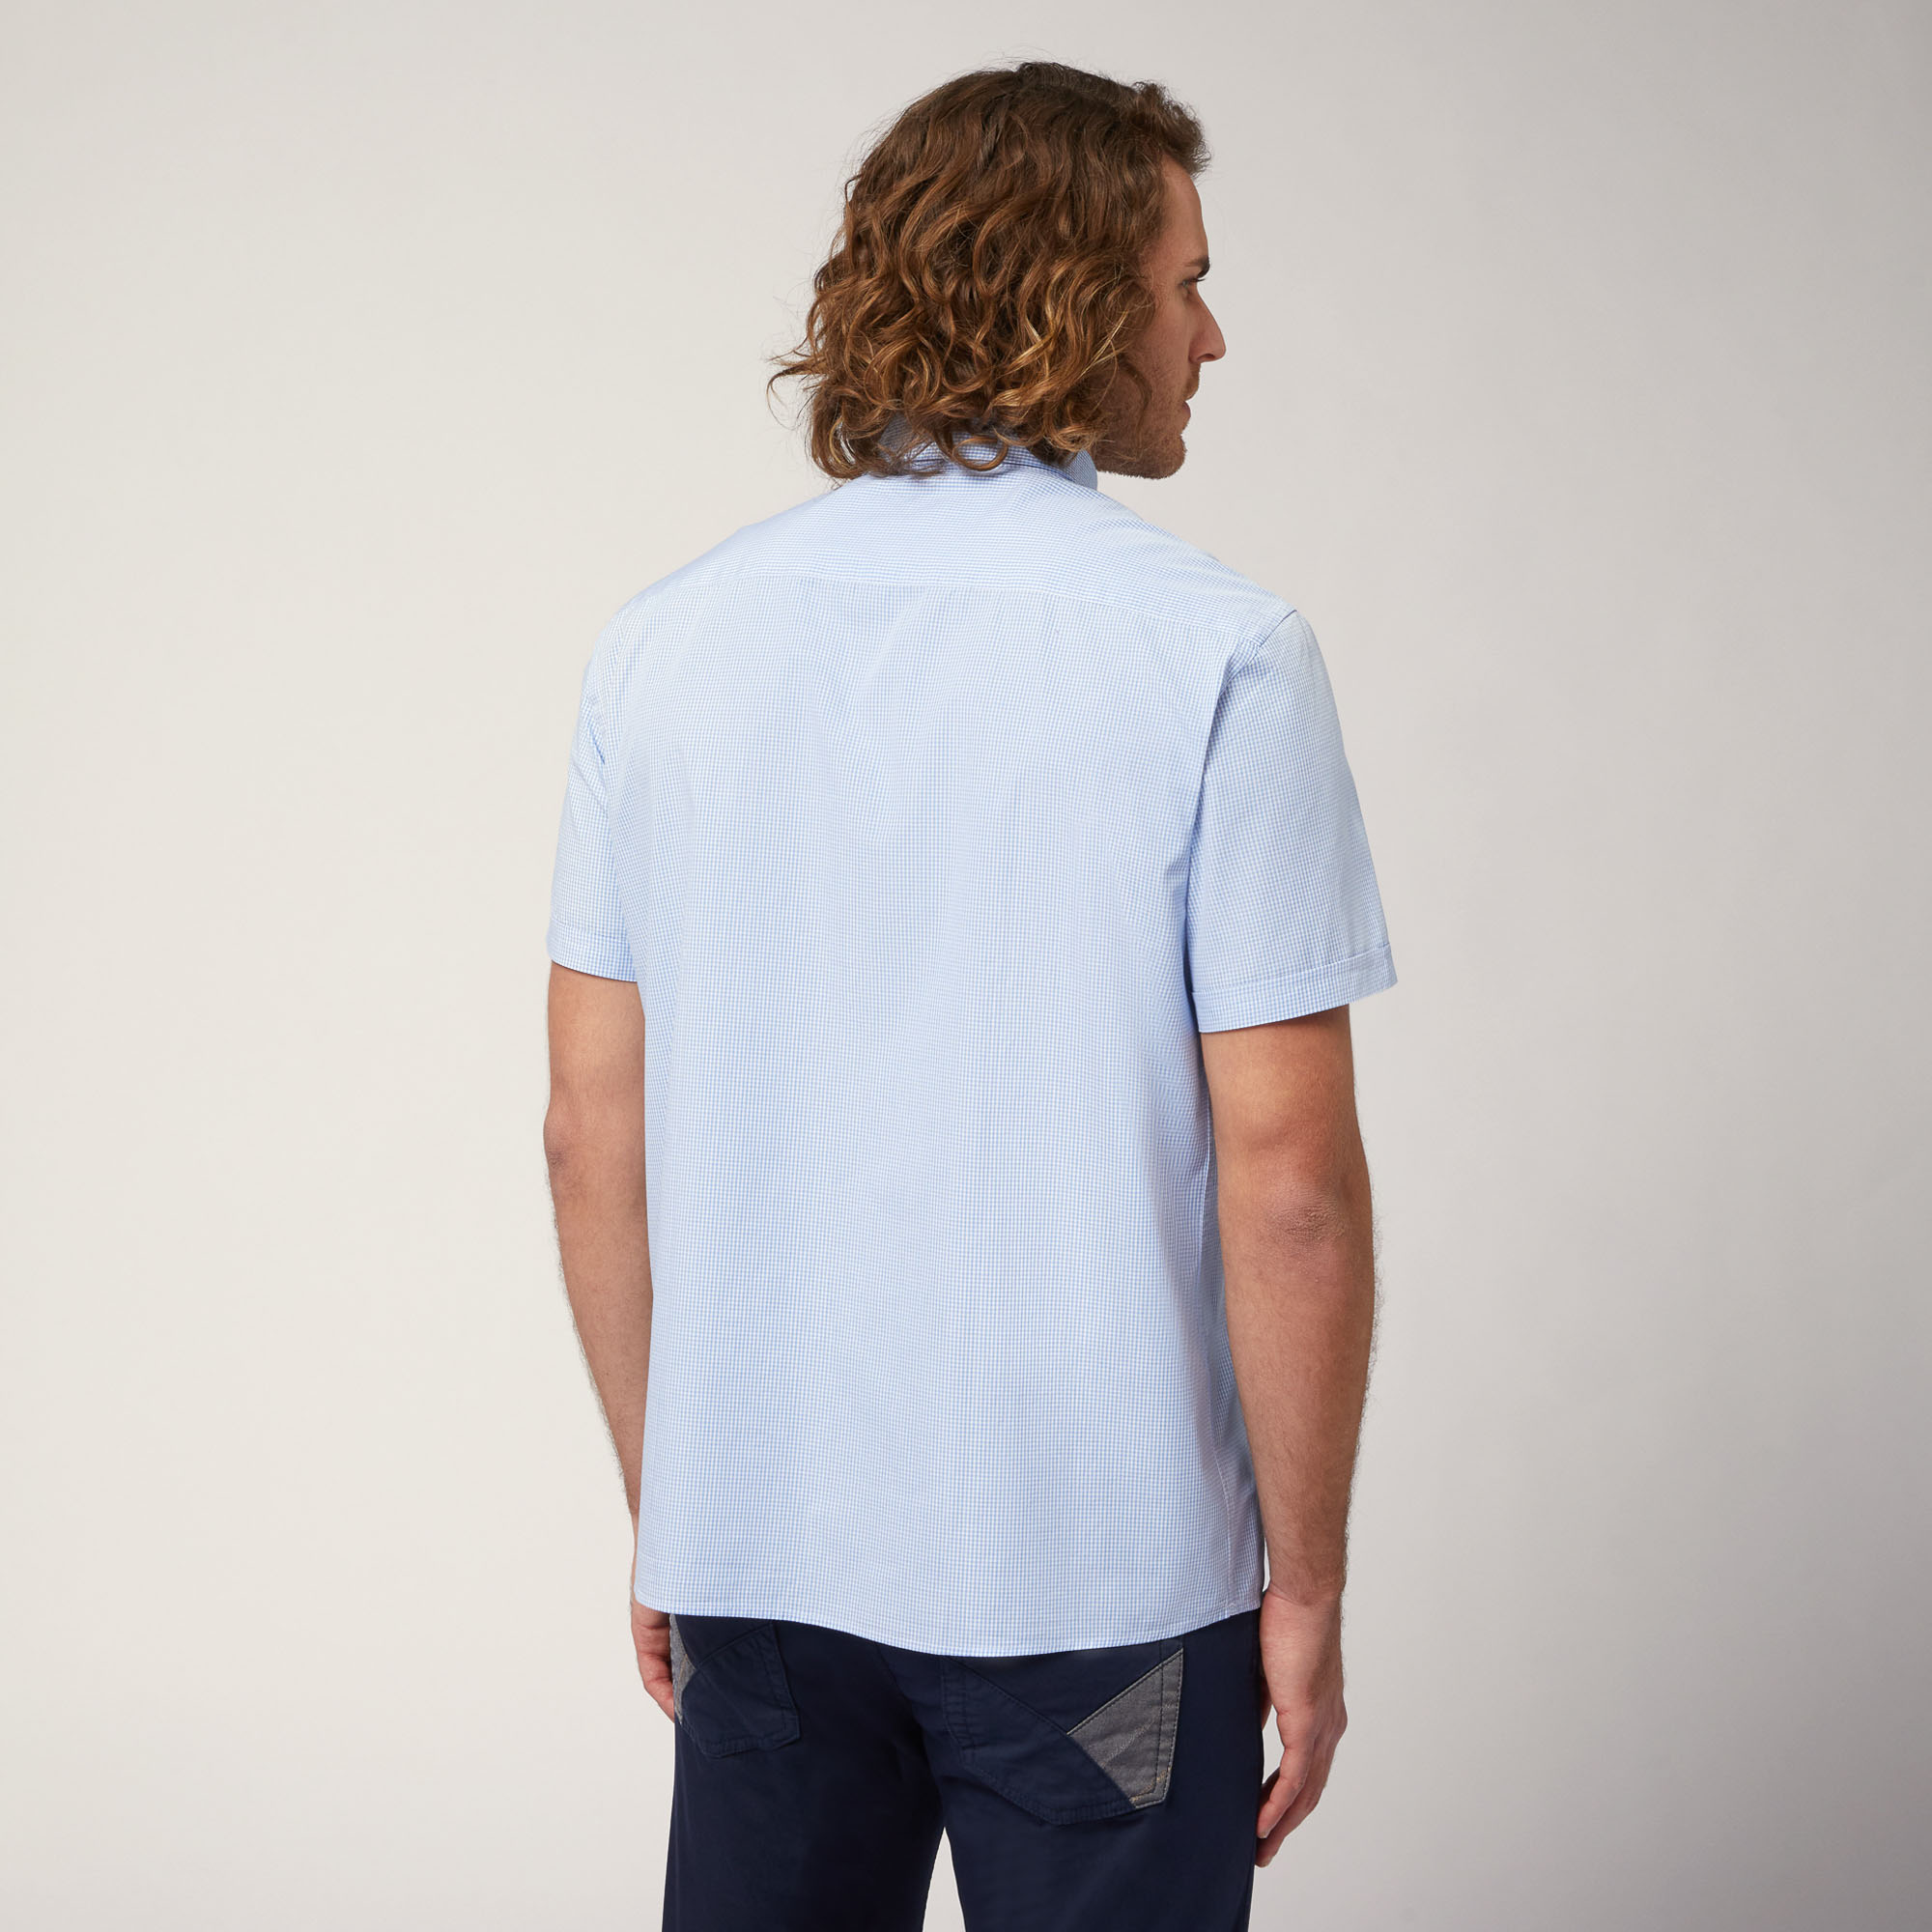 Organic Cotton Poplin Short-Sleeved Shirt, Sky Blue, large image number 1